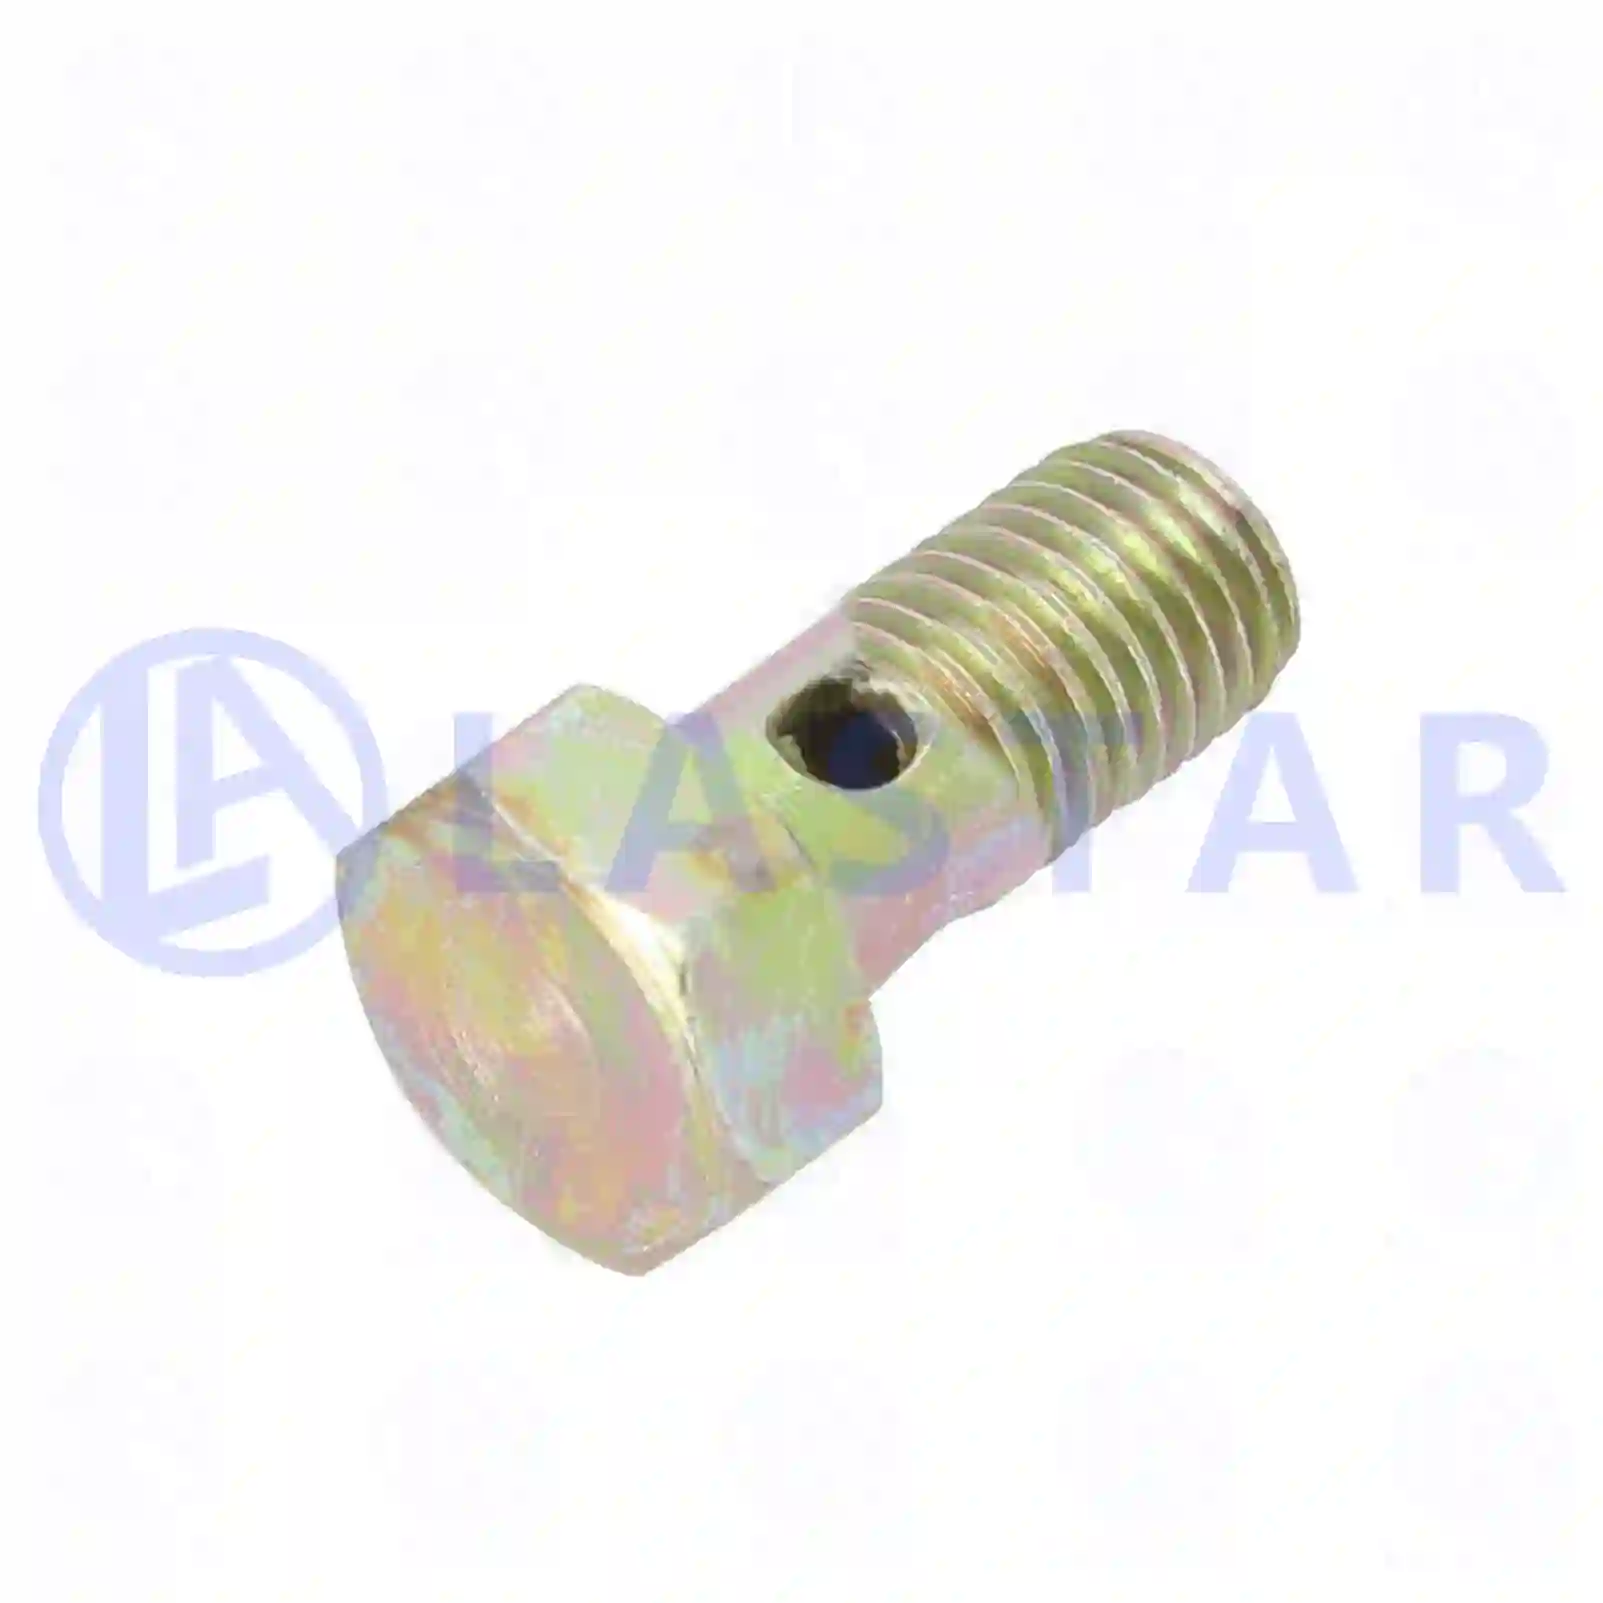  Hollow screw || Lastar Spare Part | Truck Spare Parts, Auotomotive Spare Parts